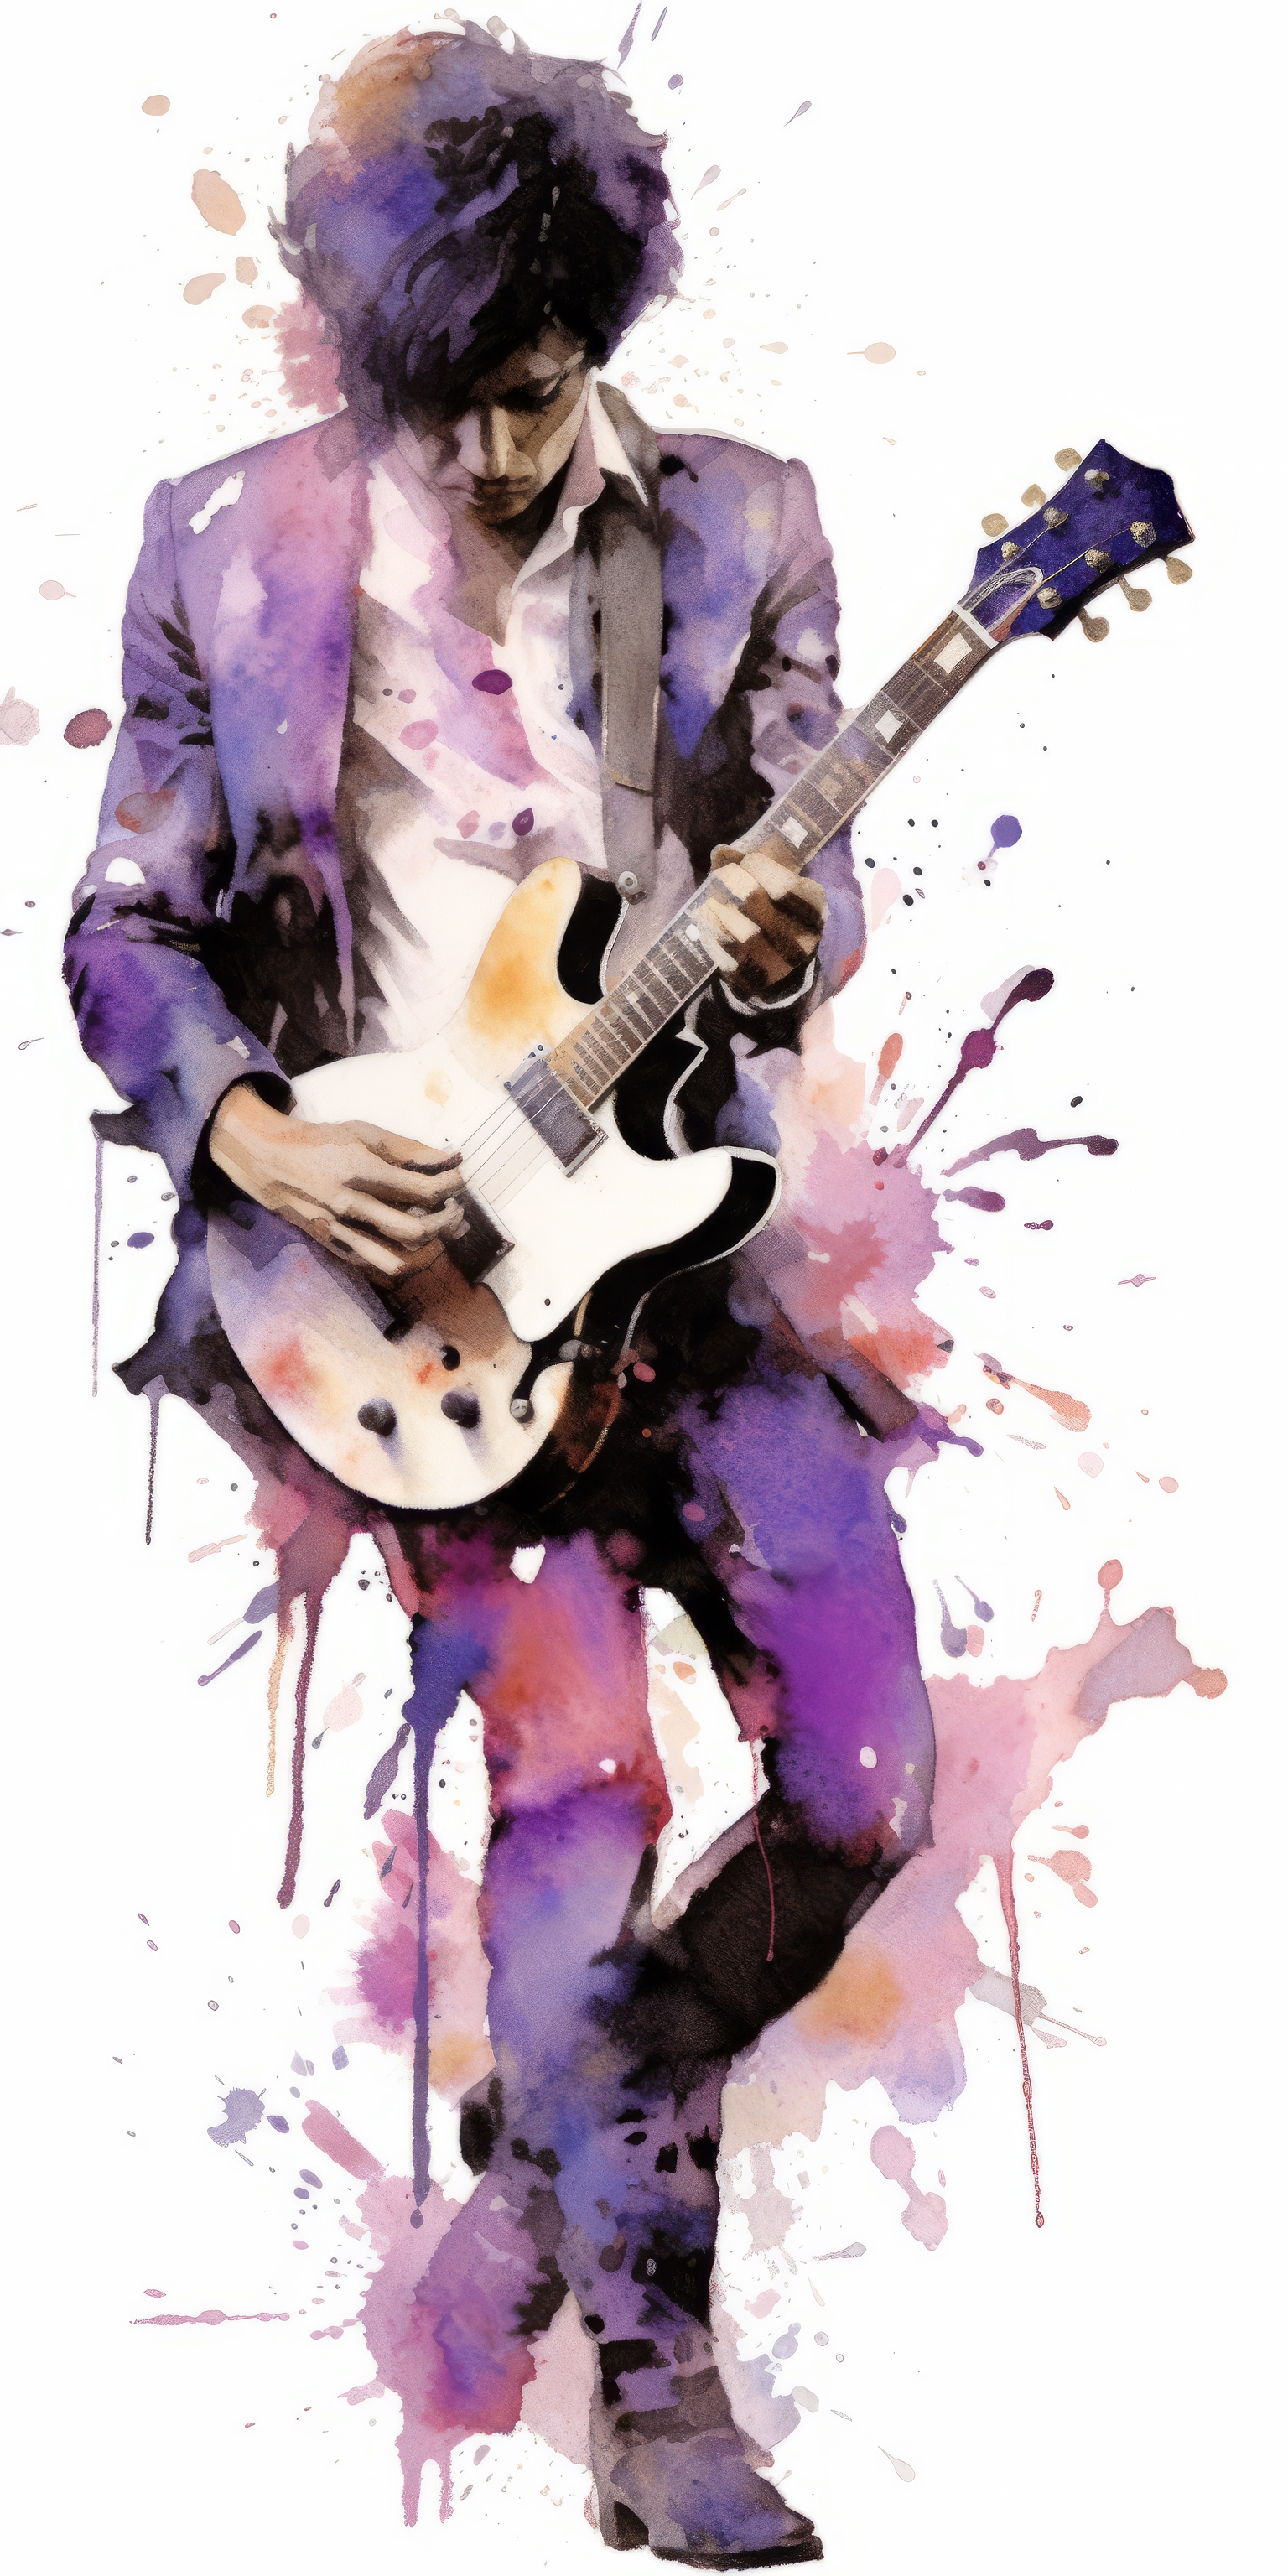 General 1536x3072 AI art portrait display watercolor style Prince guitar purple illustration men musical instrument white background simple background minimalism